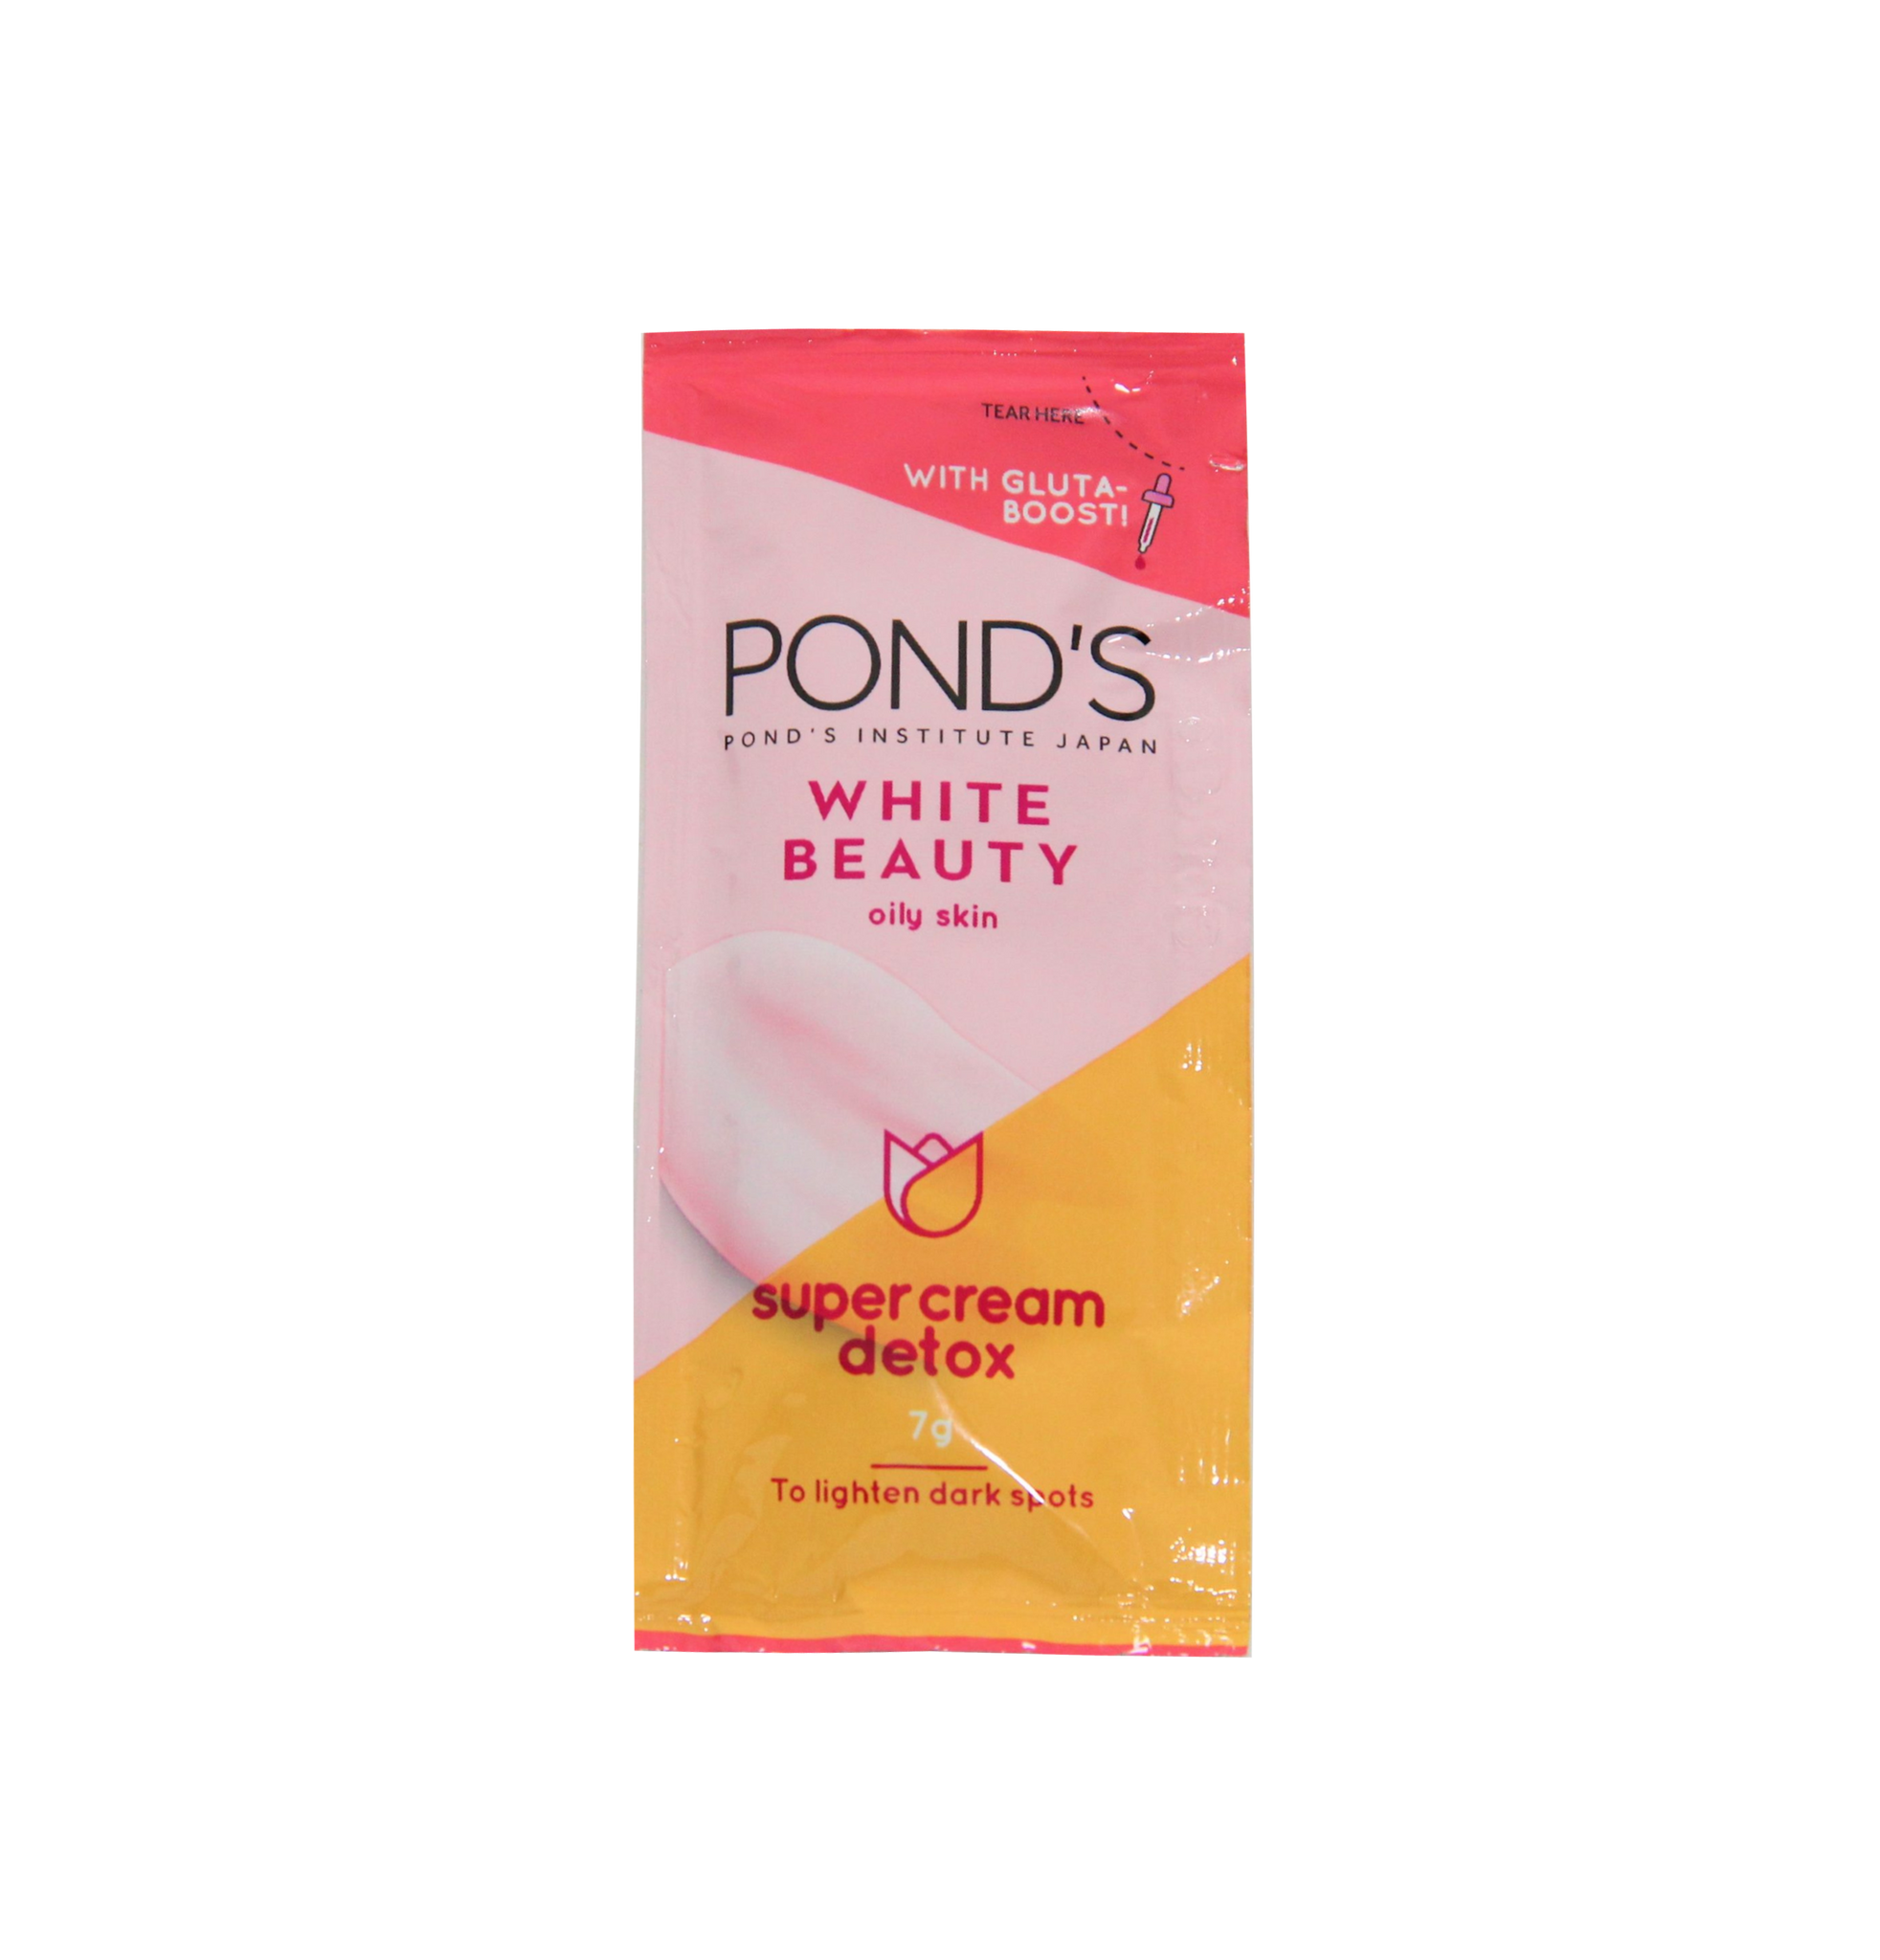 Ponds White Beauty Super Cream Detox | For Oily Skin - 7g